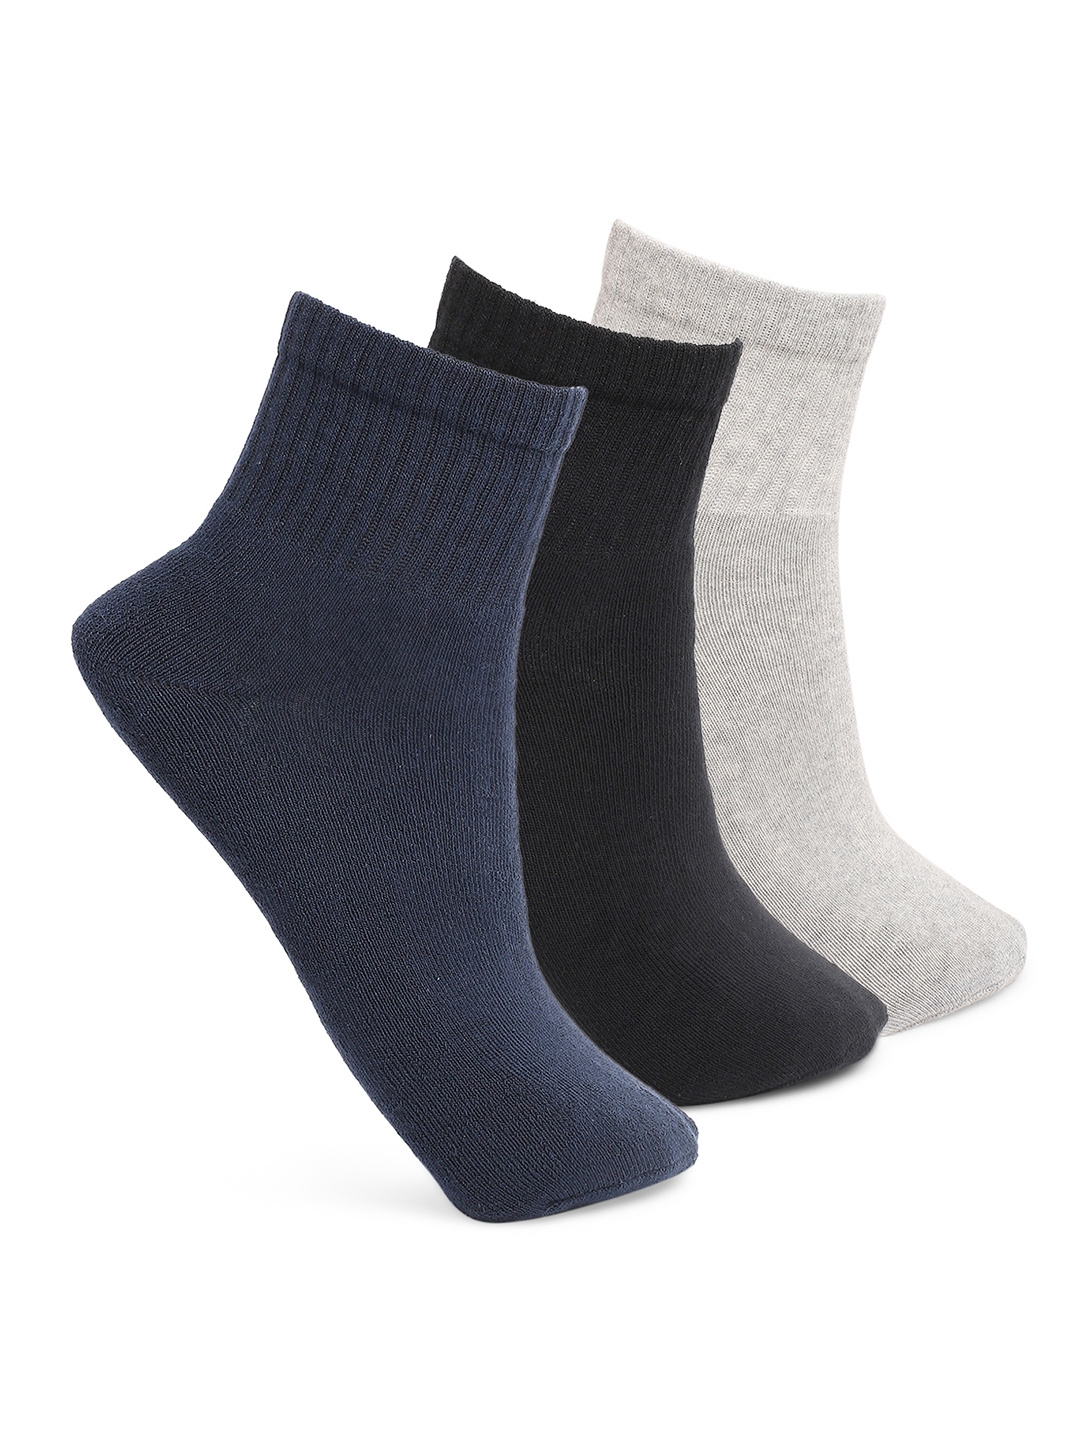 Underjeans by Spykar Men Grey & BLack Cotton Socks - Pack Of 3